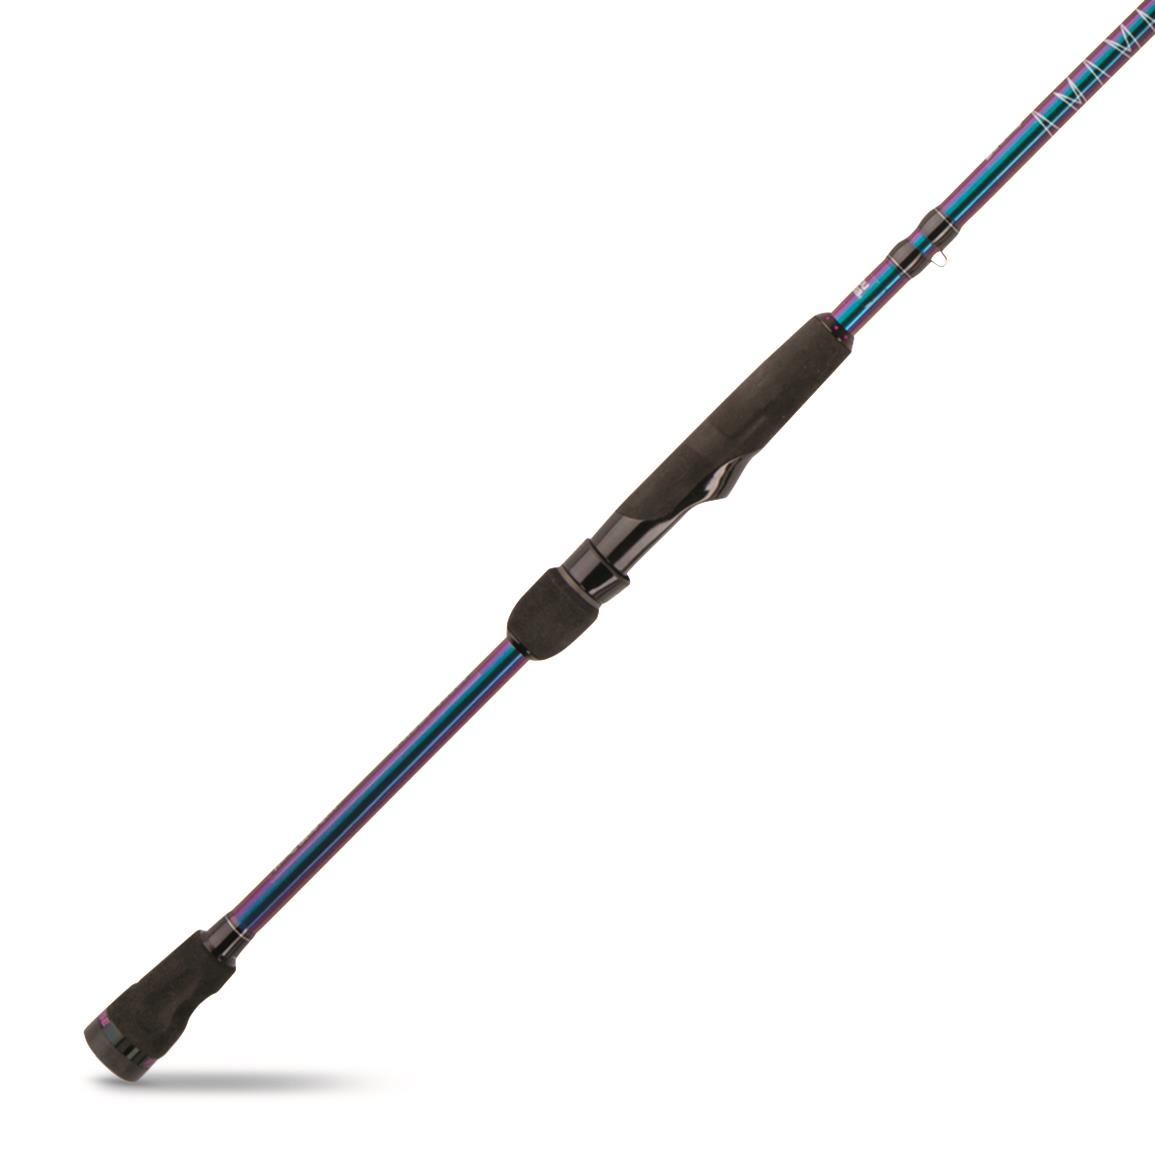 Abu Garcia Ike Signature Series Spinning Rod, 6'6" Length, Medium Heavy Power, Fast Action